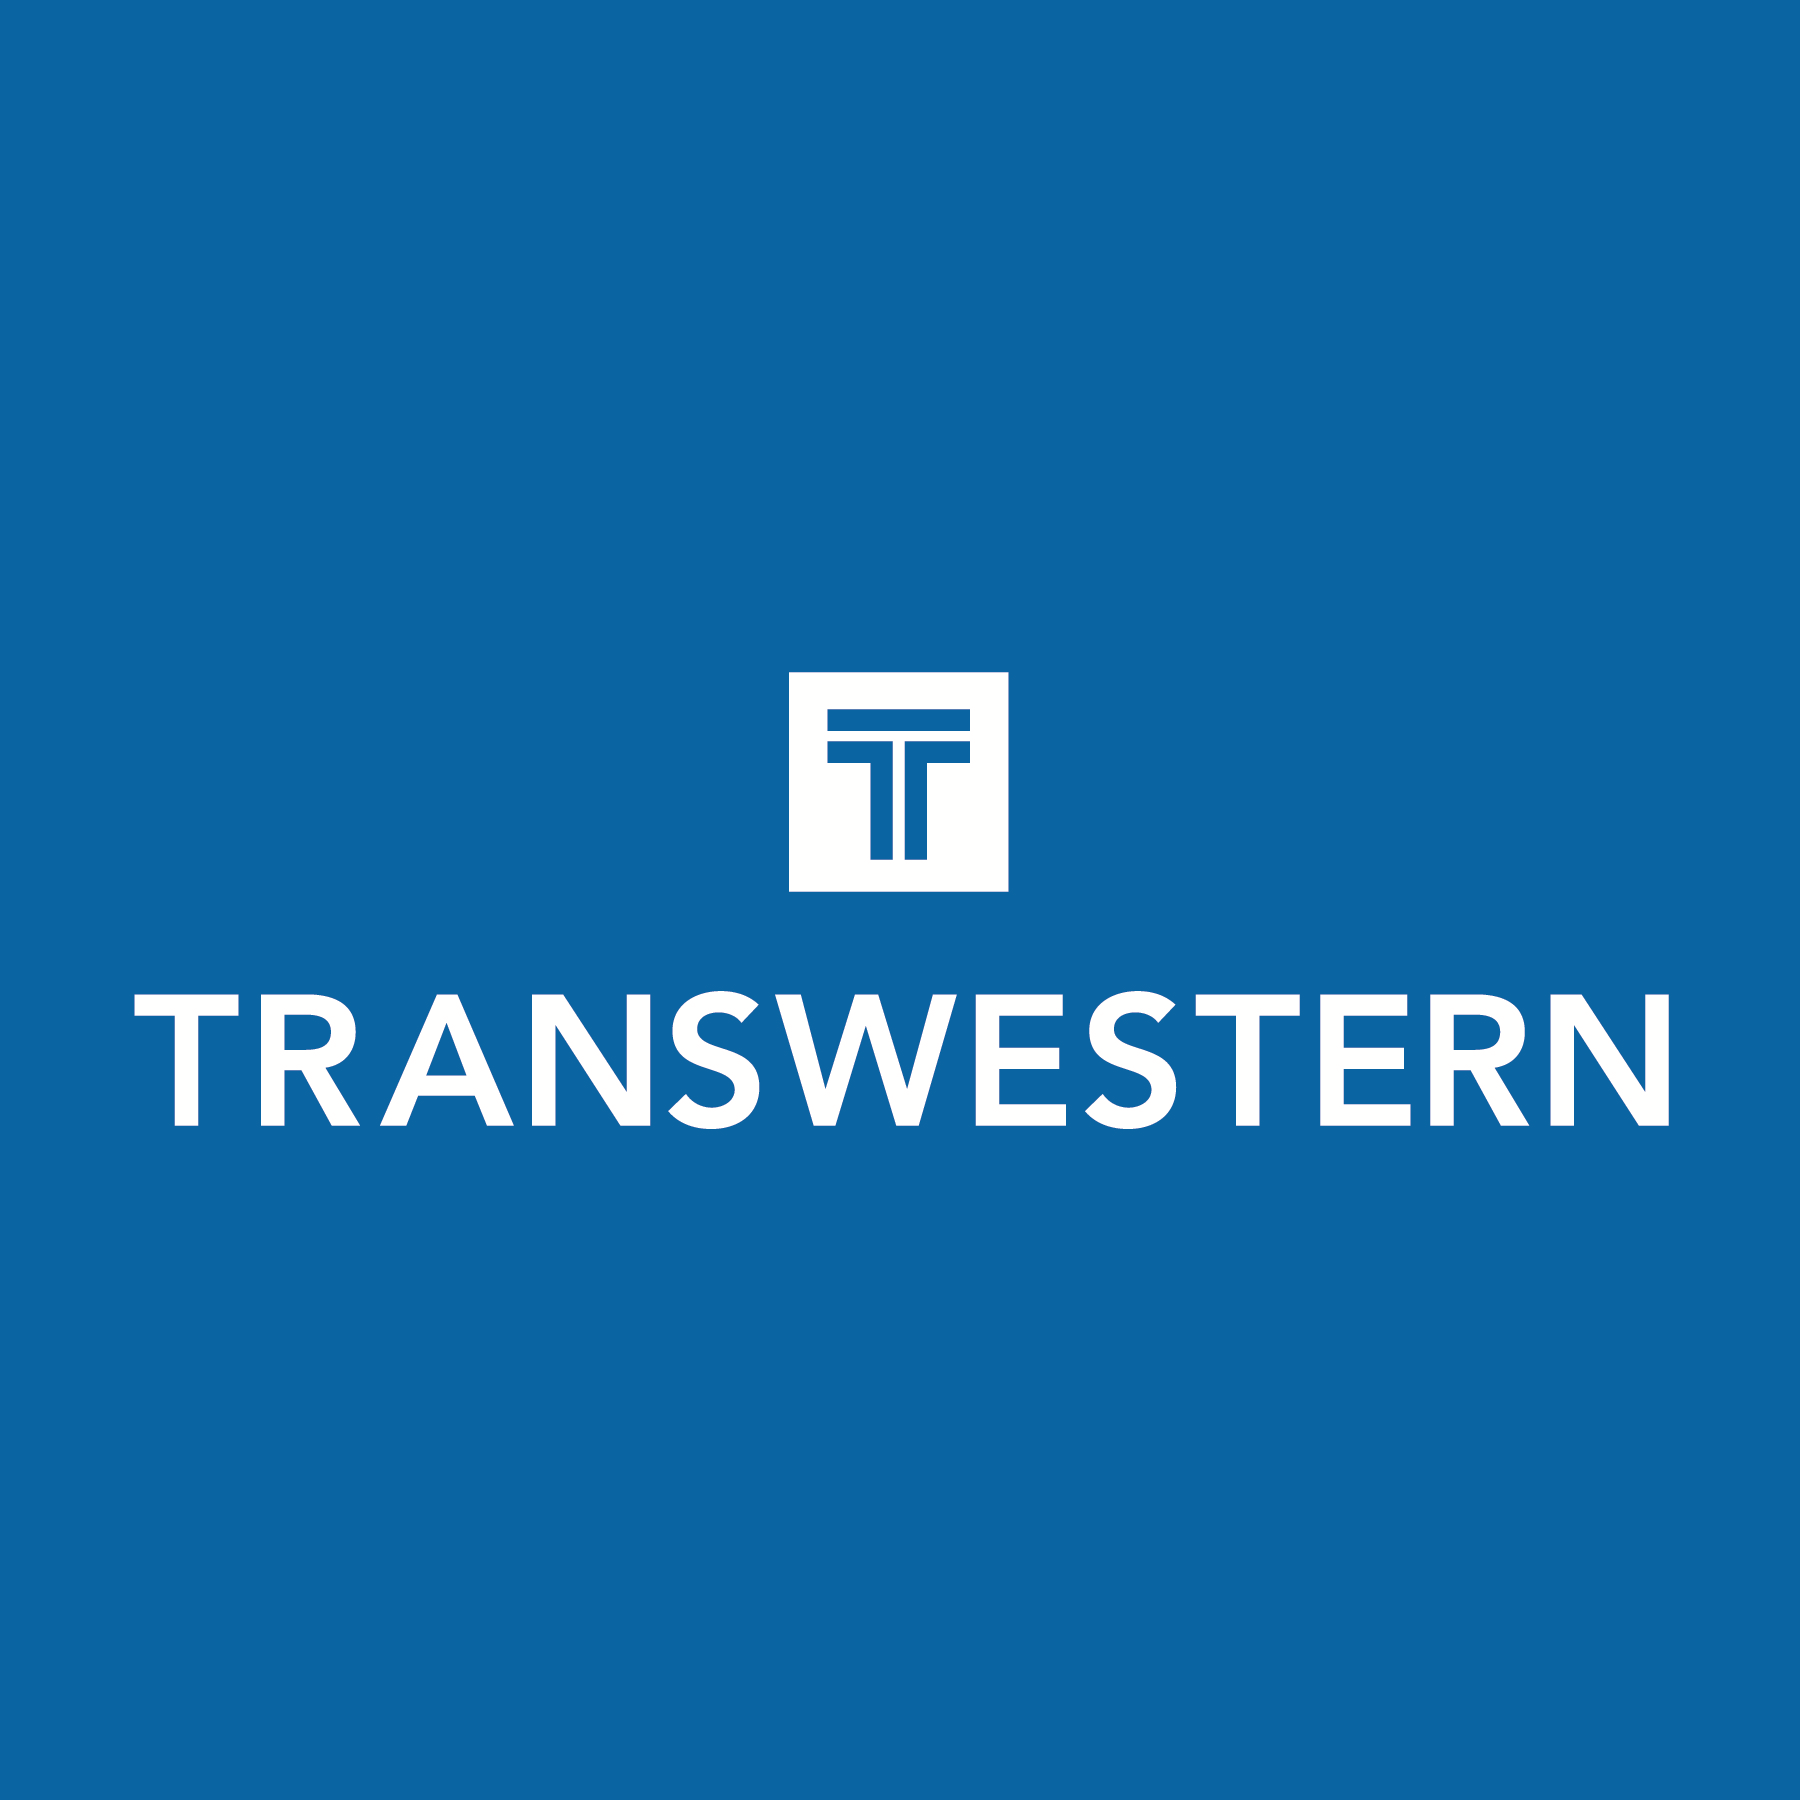 Transwestern Real Estate Services logo